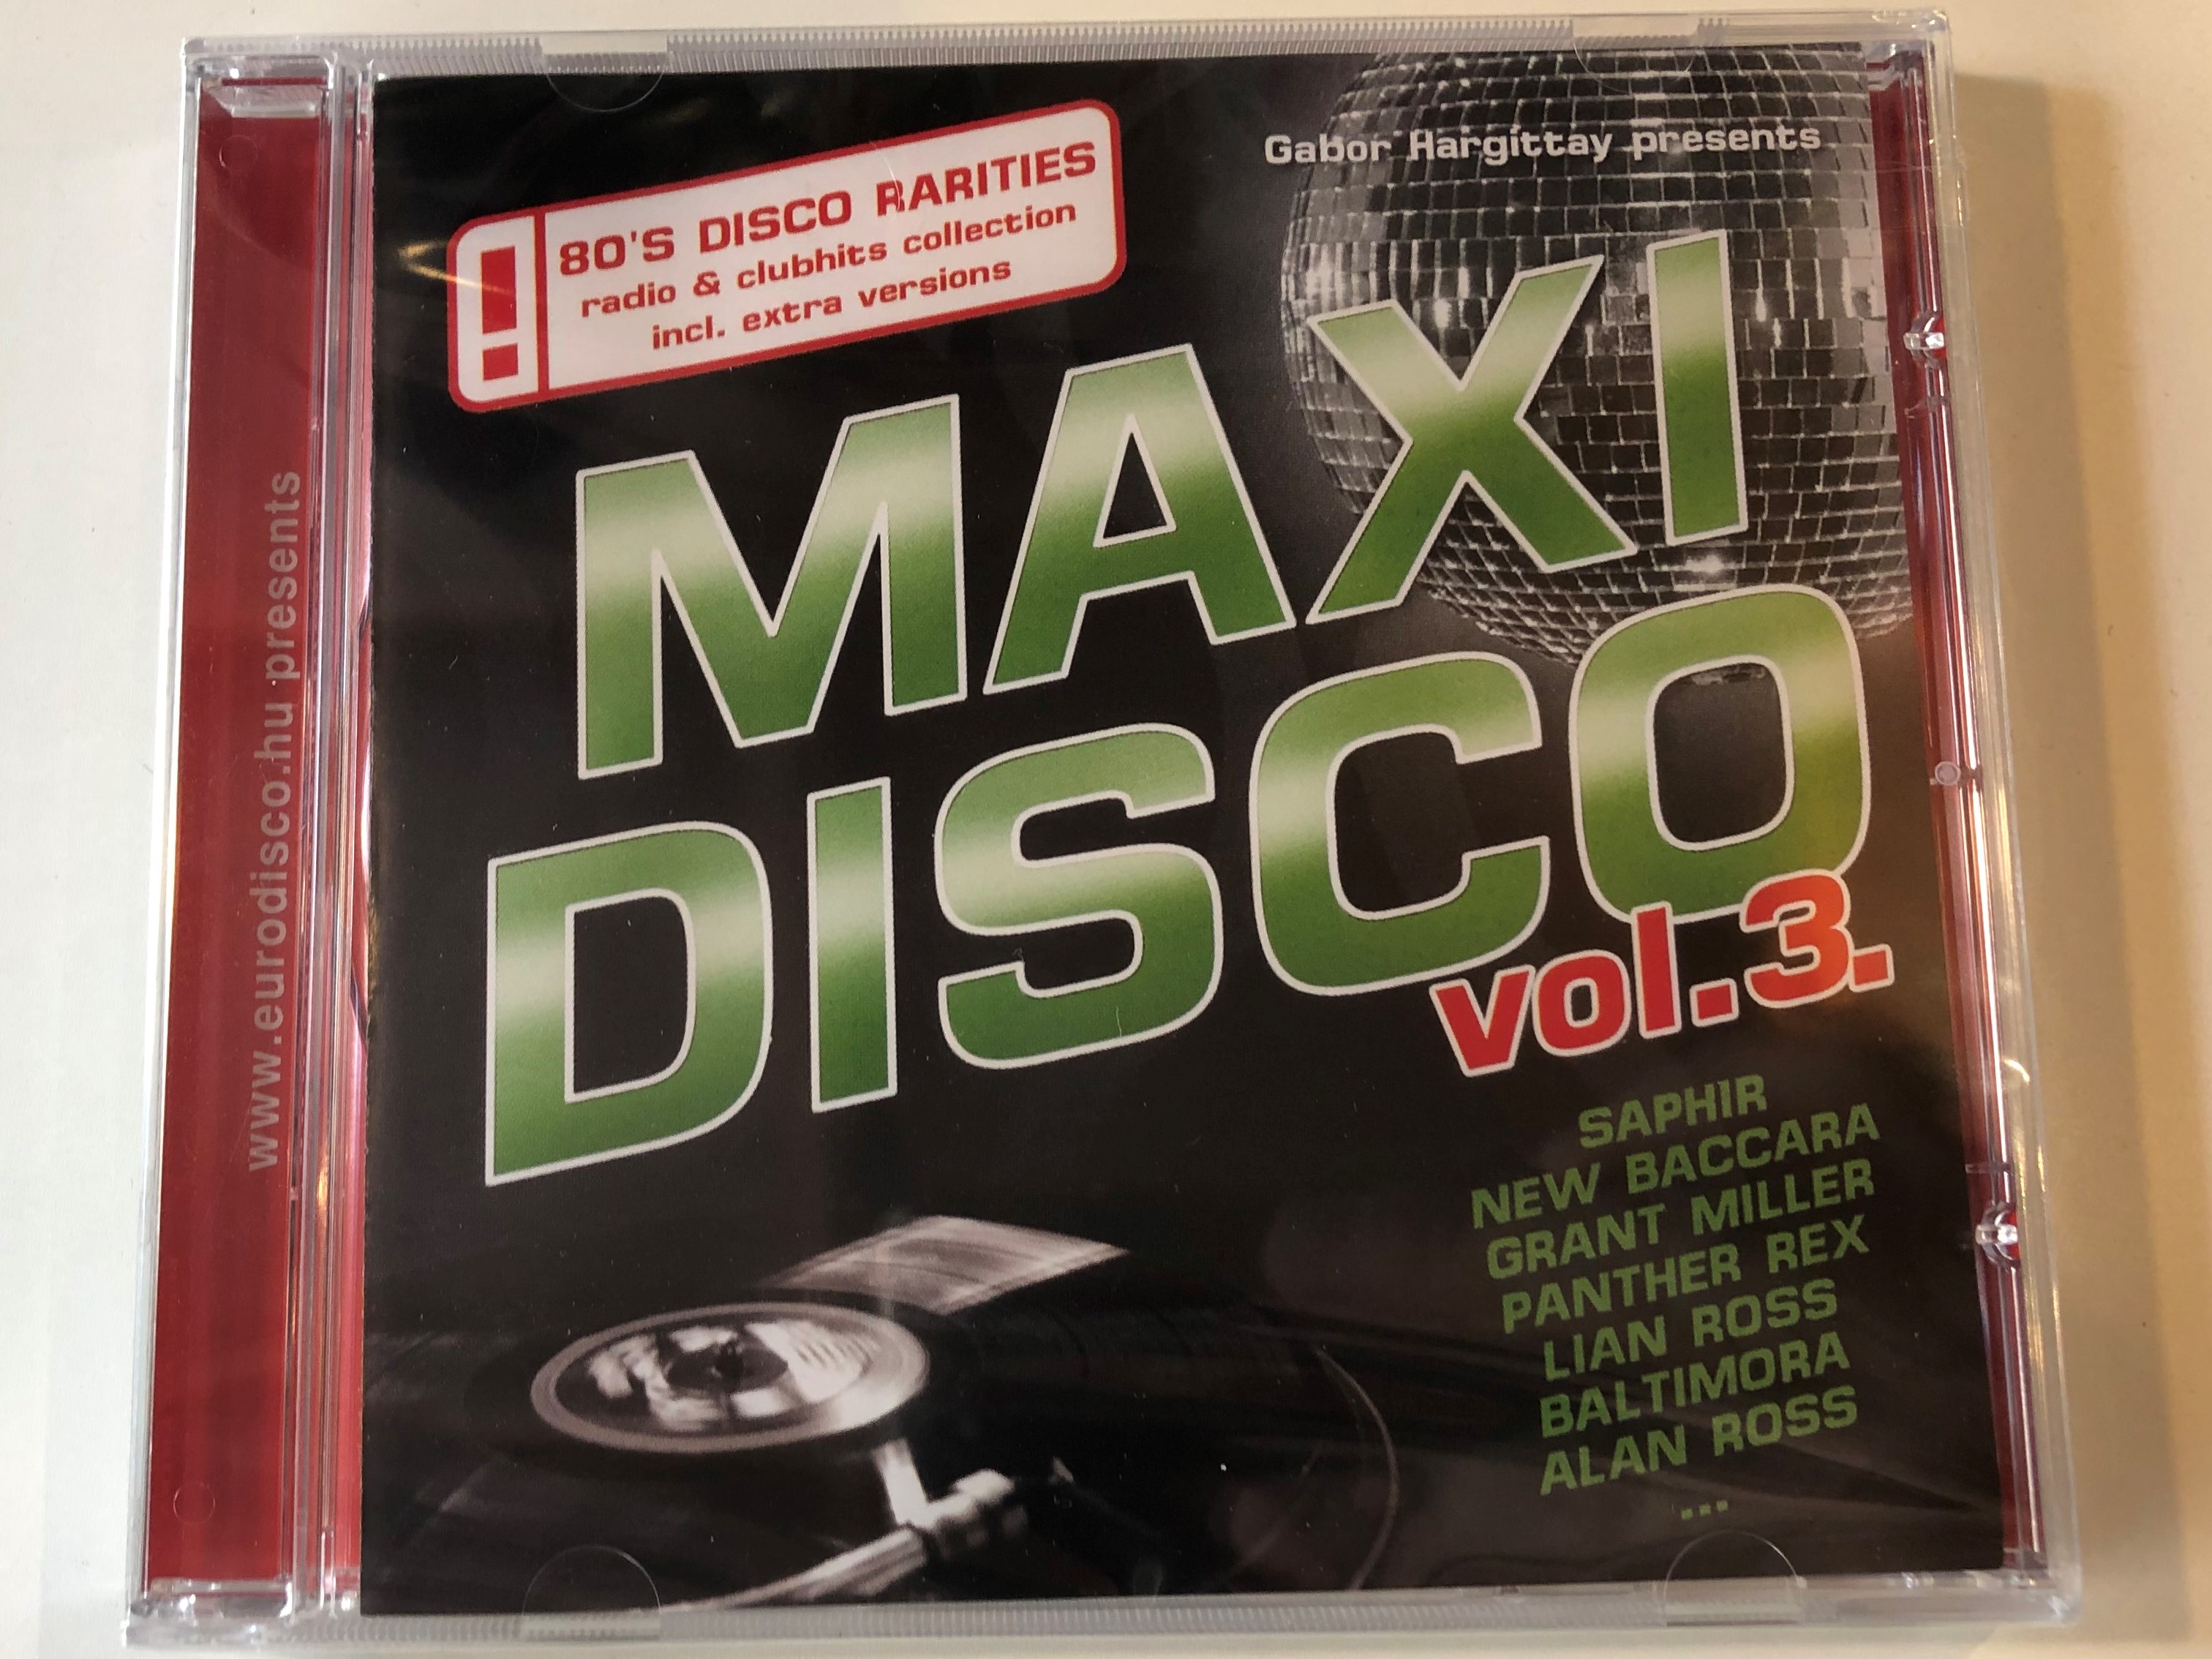 gabor-hargittay-presents-maxi-disco-vol.-3.-saphir-new-baccara-grant-miller-panther-rex-lian-ross-baltimora-alan-ross...-80-s-disco-rarities-radio-clubhits-collection-incl.-extra-versio-1-.jpg